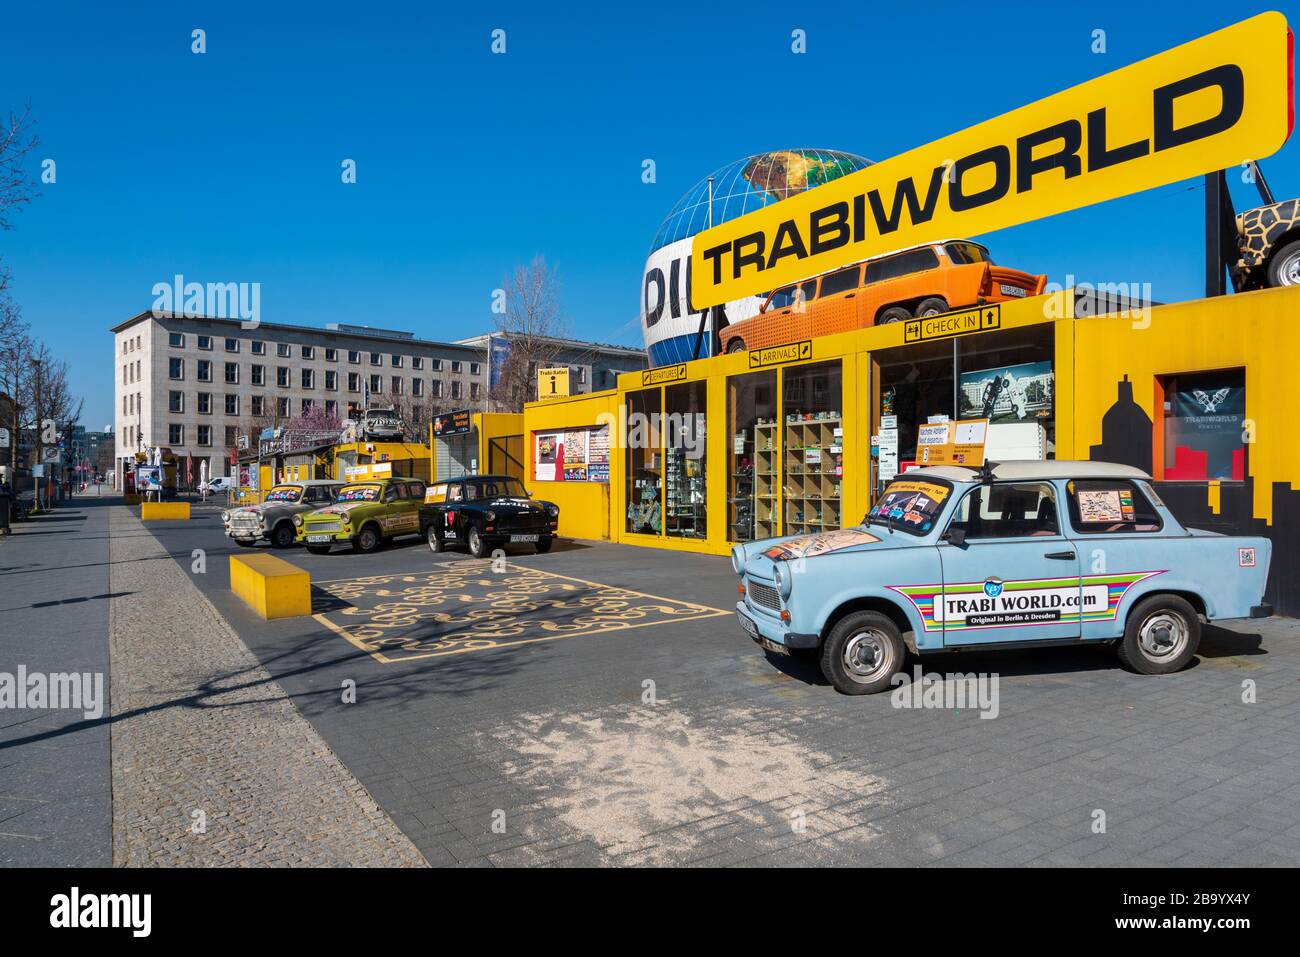 'Trabiworld' Trabant car hire tourist attraction in Berlin closed during  coronavirus lockdown Stock Photo